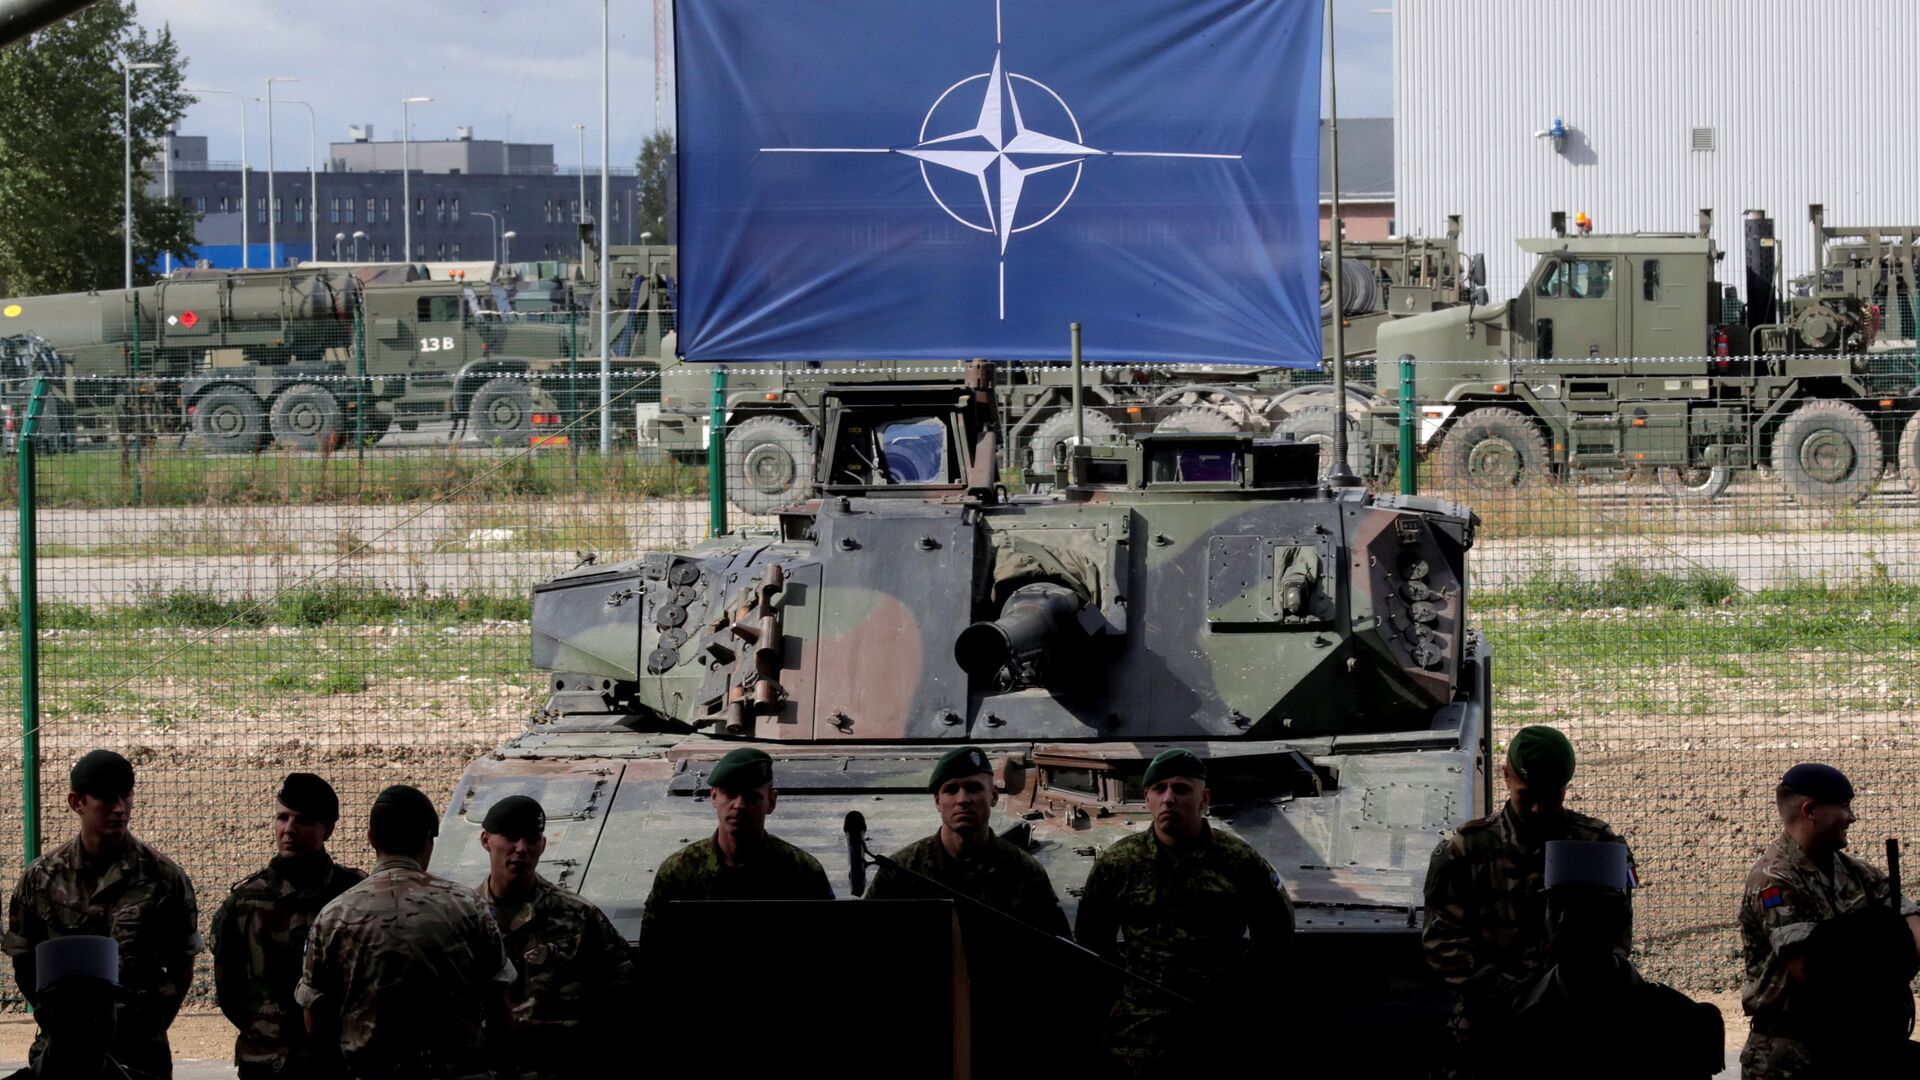 NATO eFP battle group soldiers wait for NATO Secretary General Jens Stoltenberg visit in Tapa military base, Estonia September 6, 2017 - Sputnik International, 1920, 29.01.2022